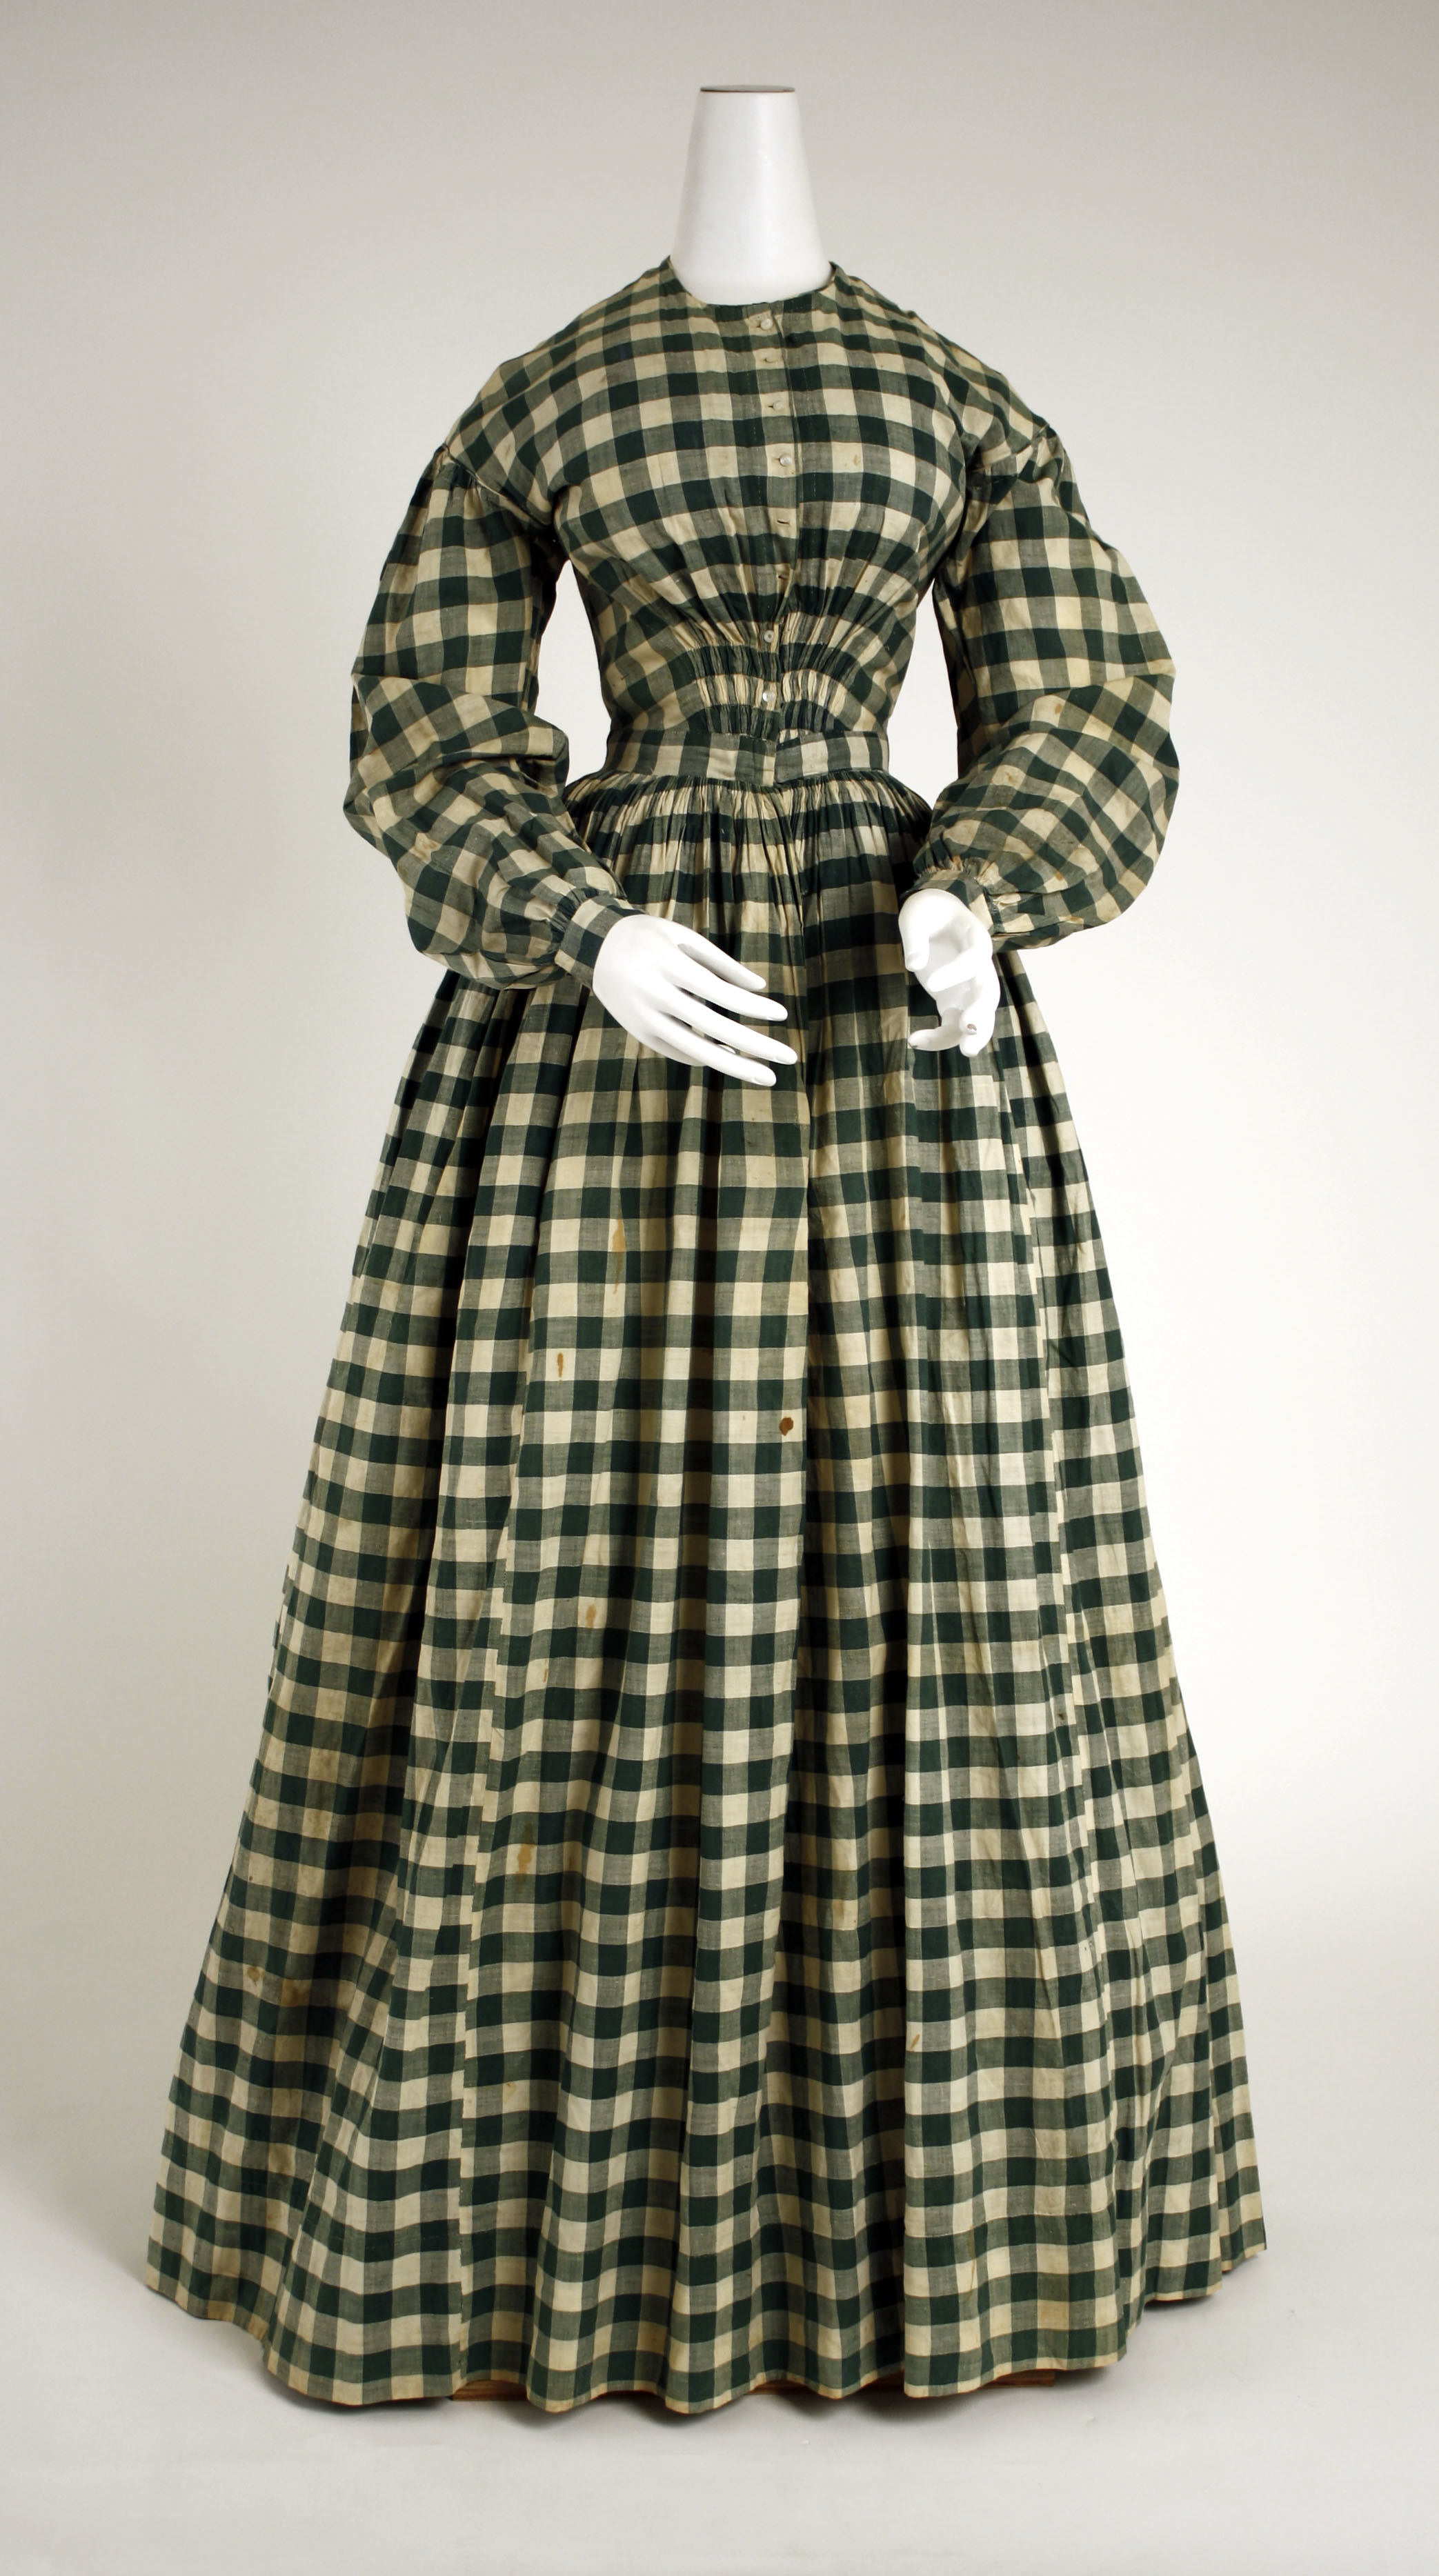 Одежда 1850